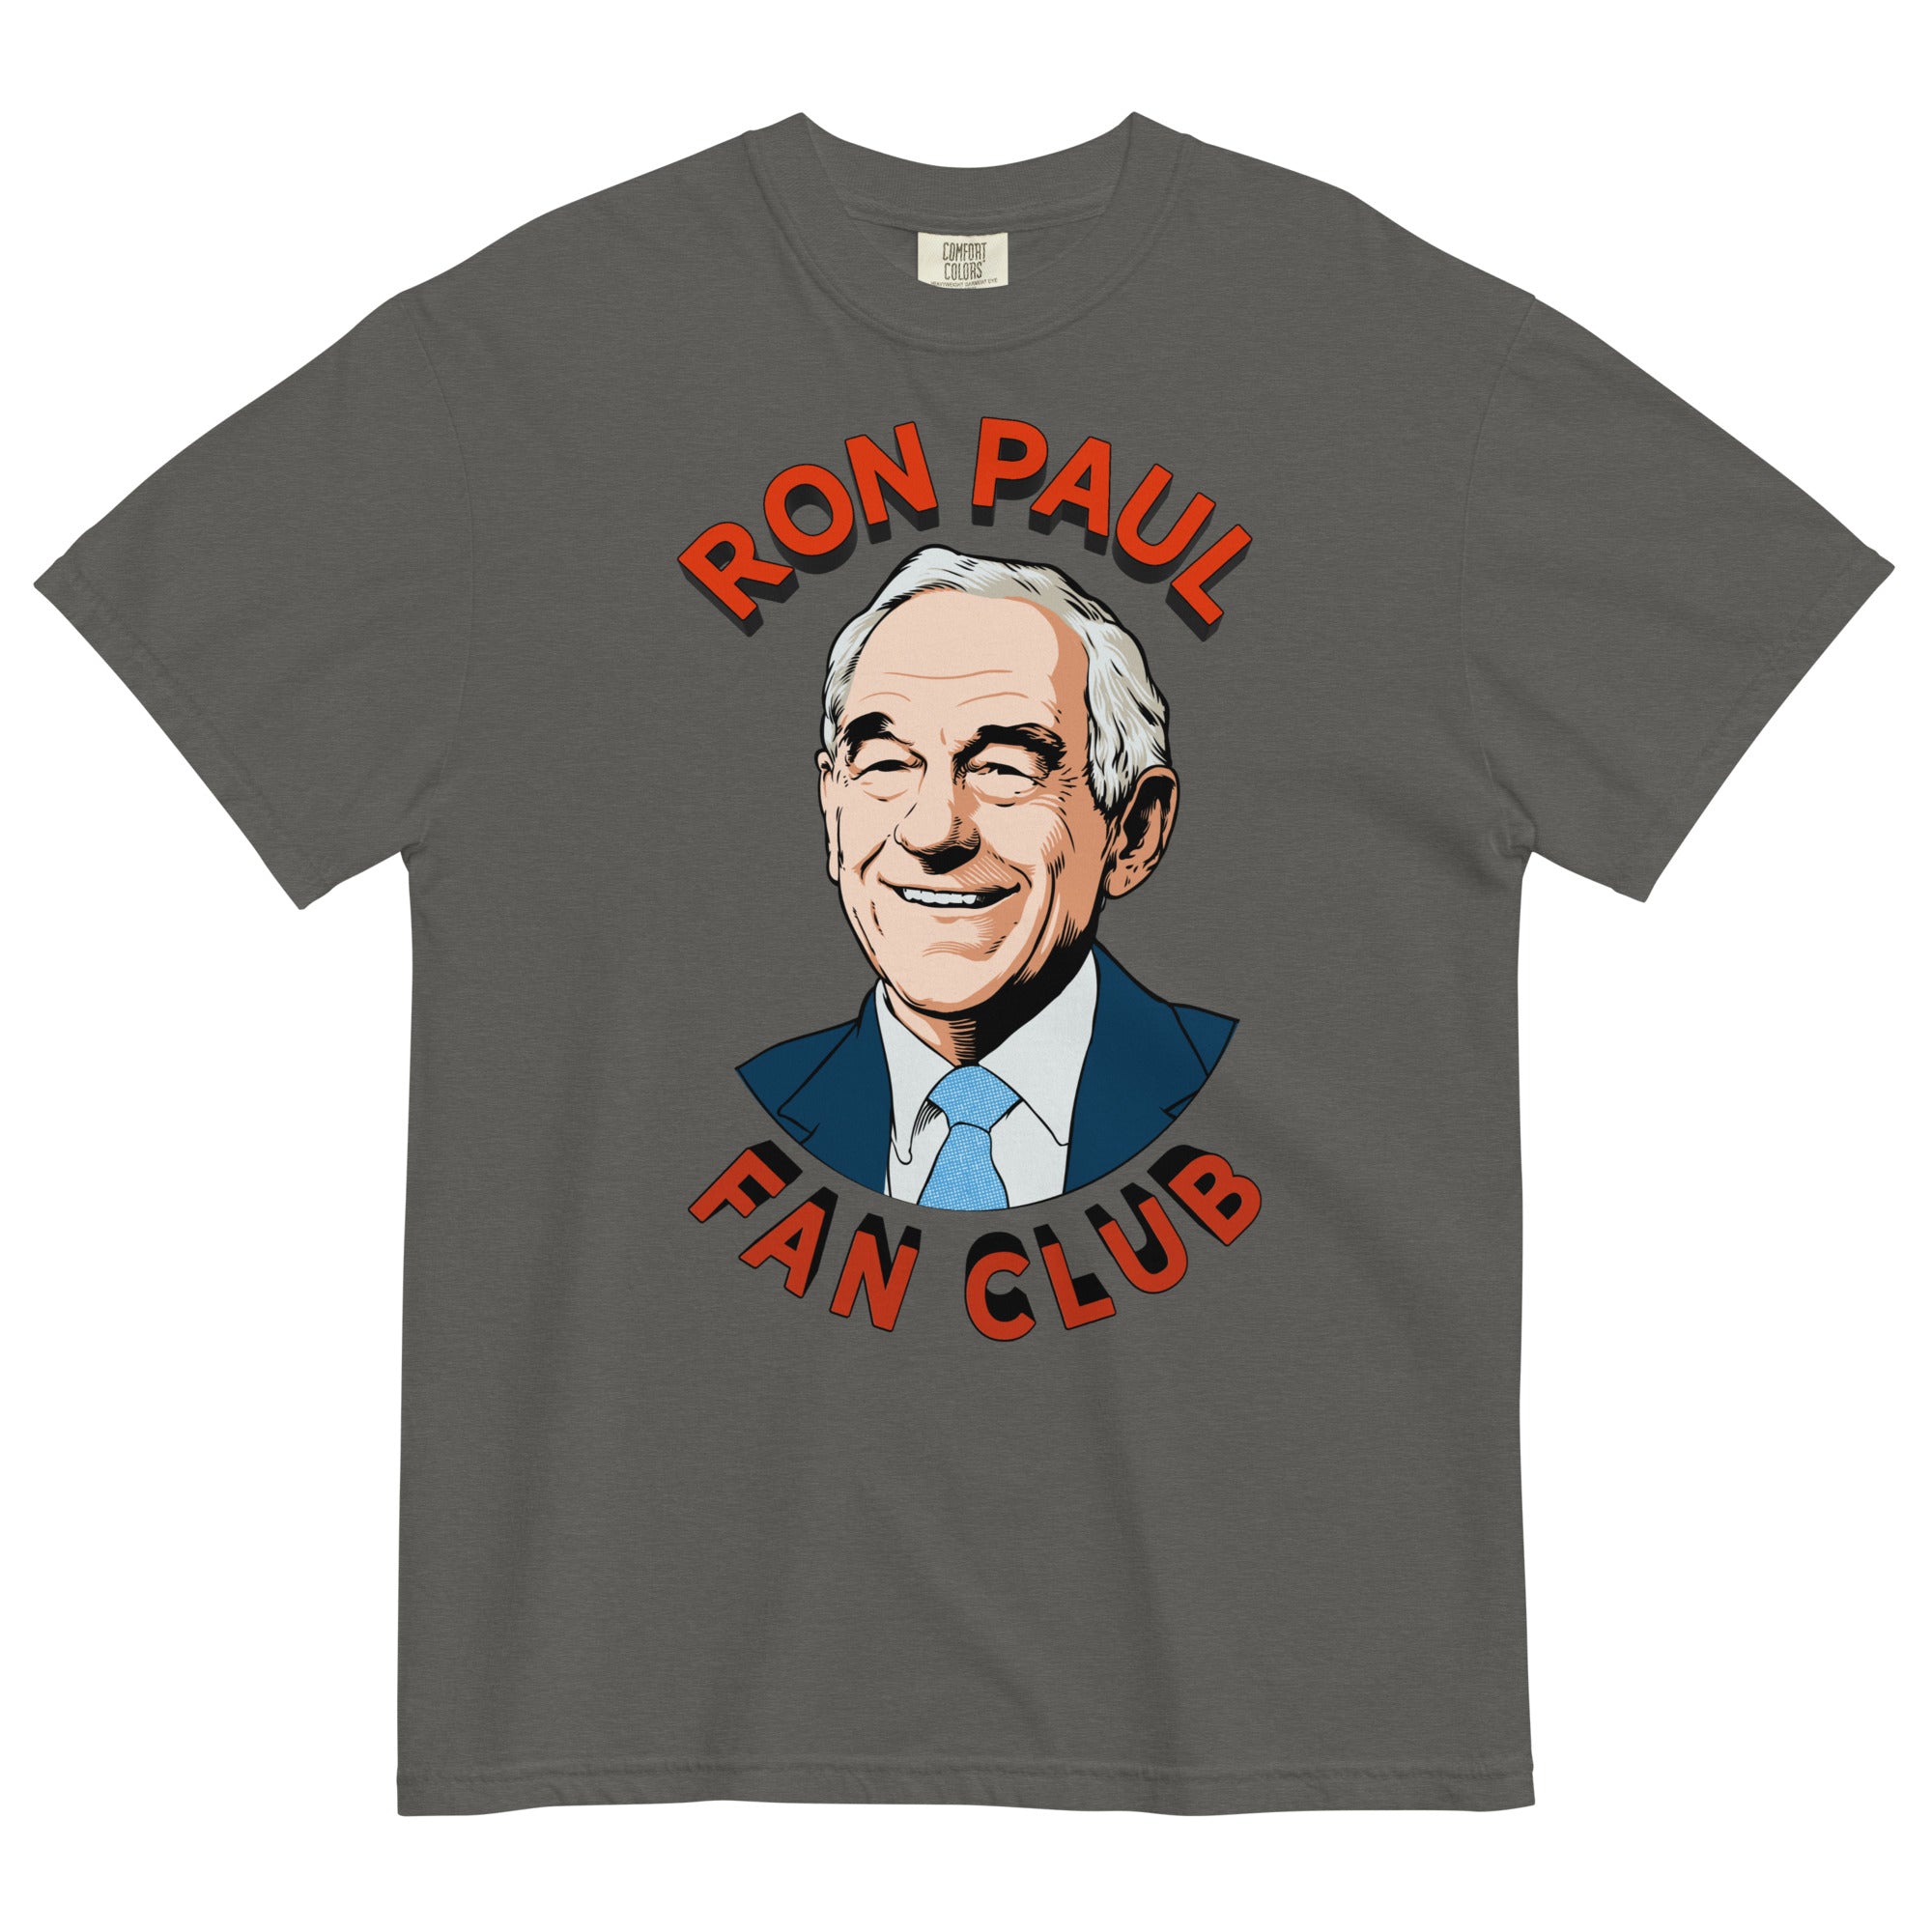 Ron Paul Fan Club Garment-dyed Heavyweight T-Shirt